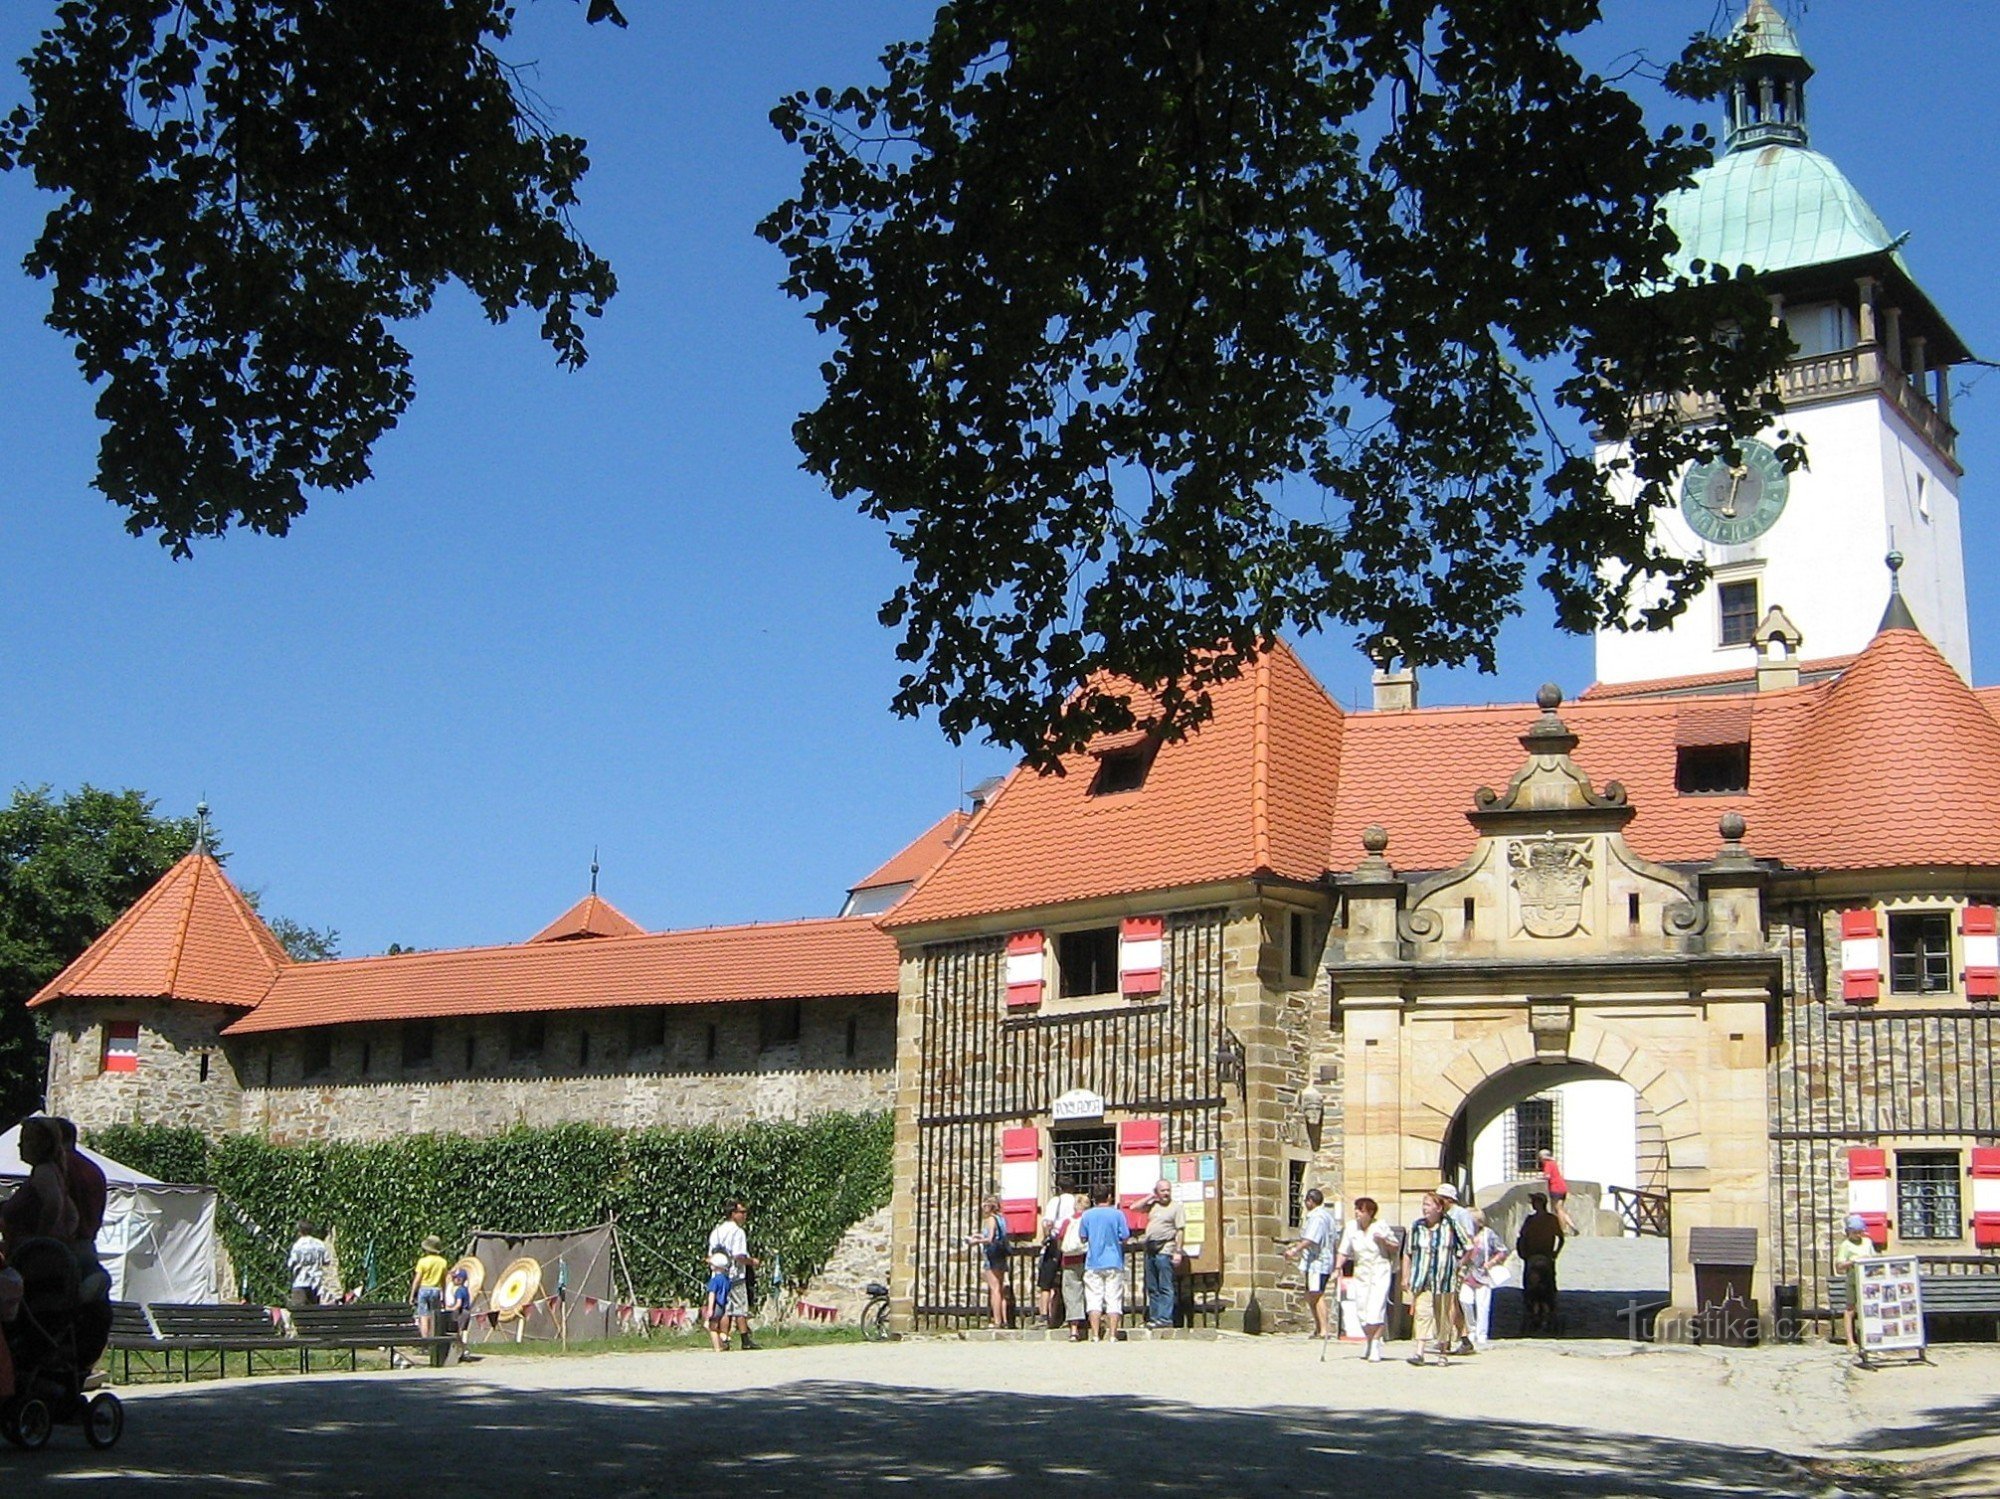 Castelul Bouzov